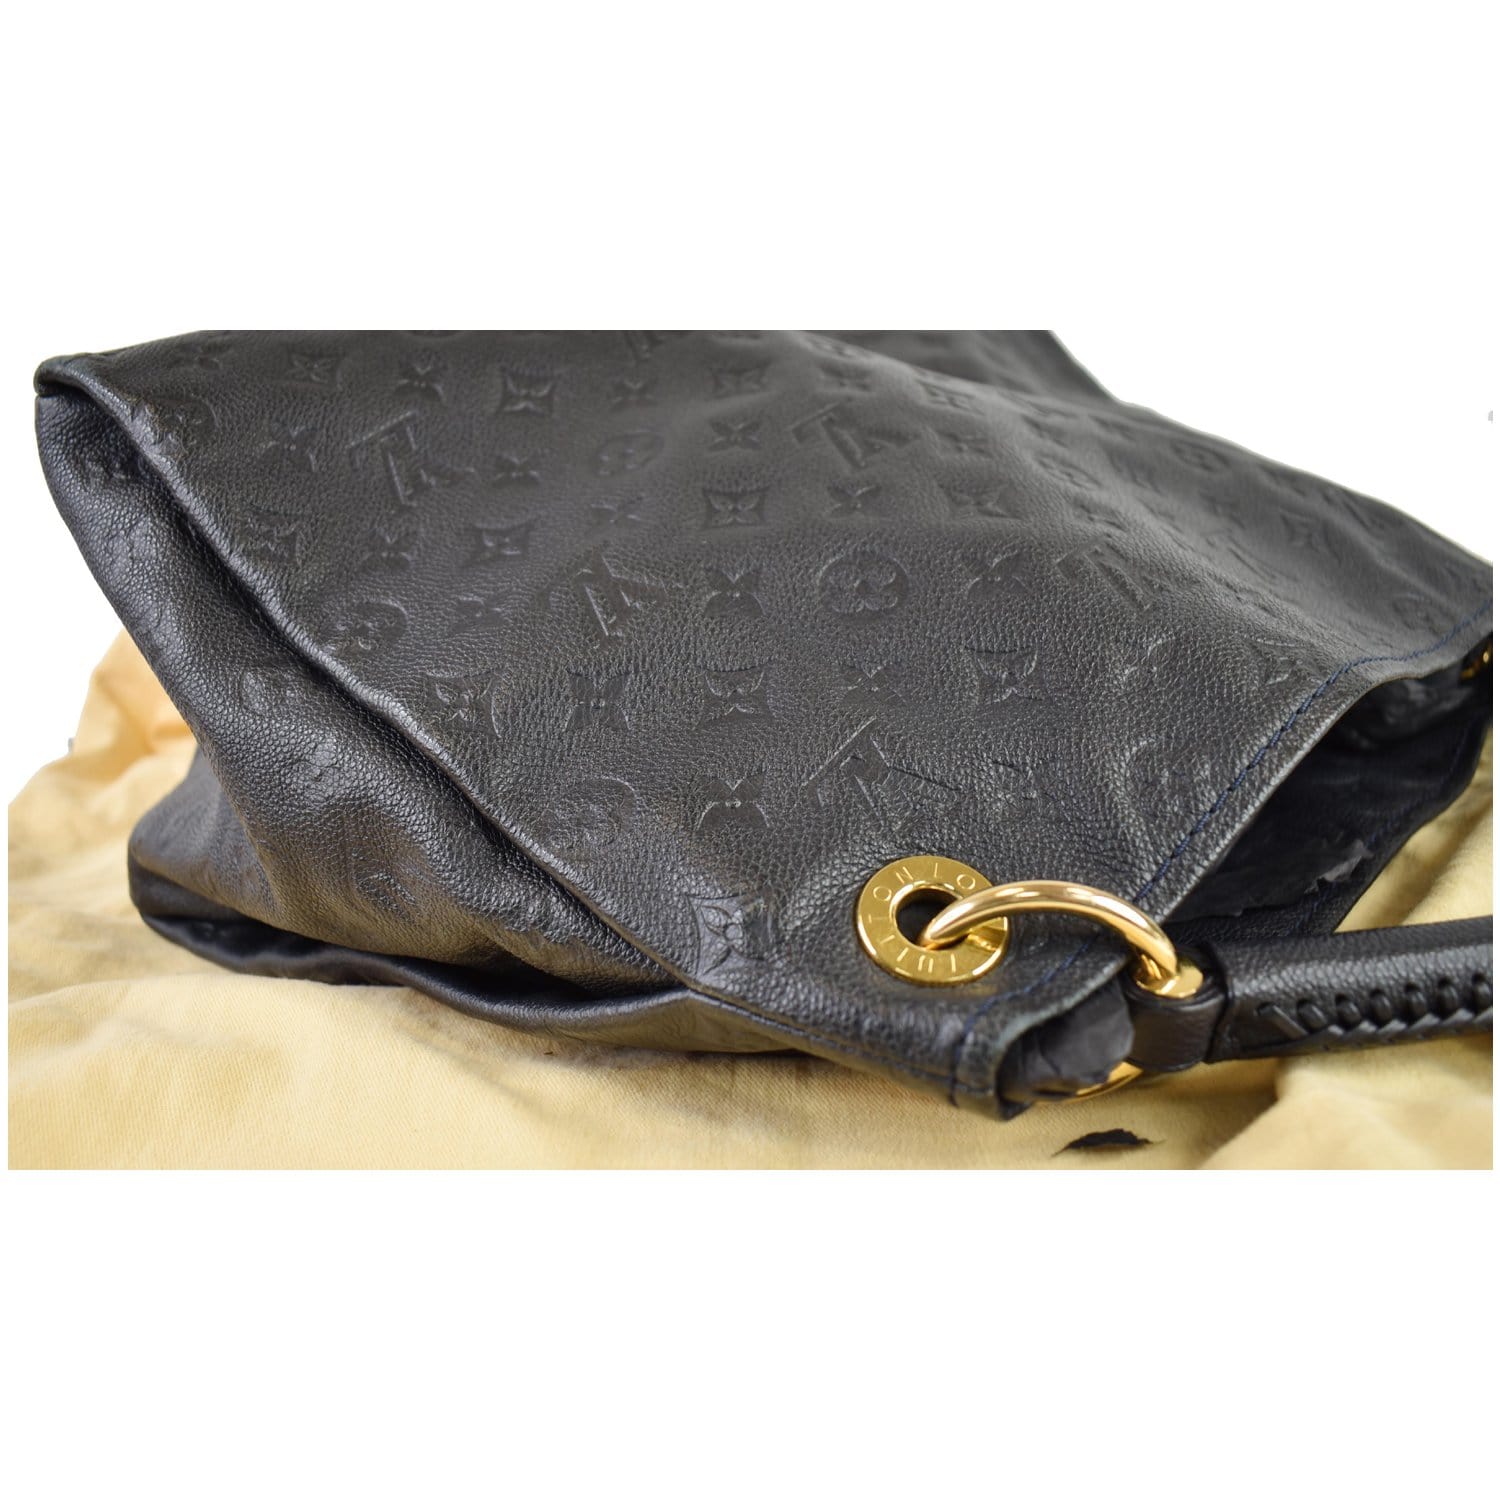 Artsy leather handbag Louis Vuitton Black in Leather - 29539649